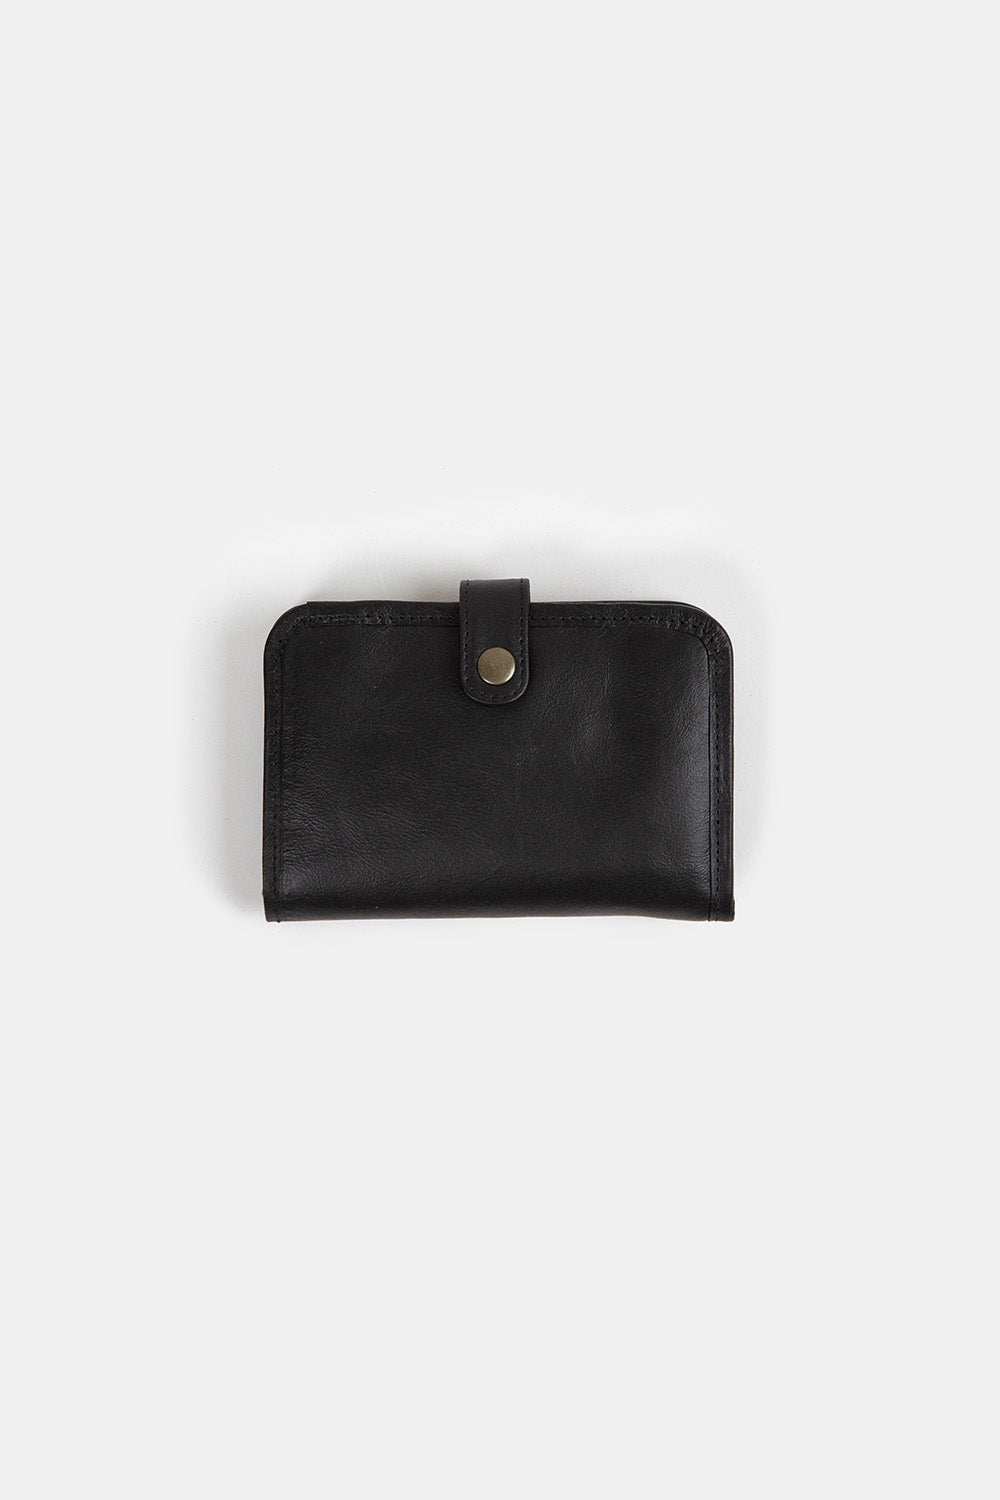 Eliot Leather Wallet In Black